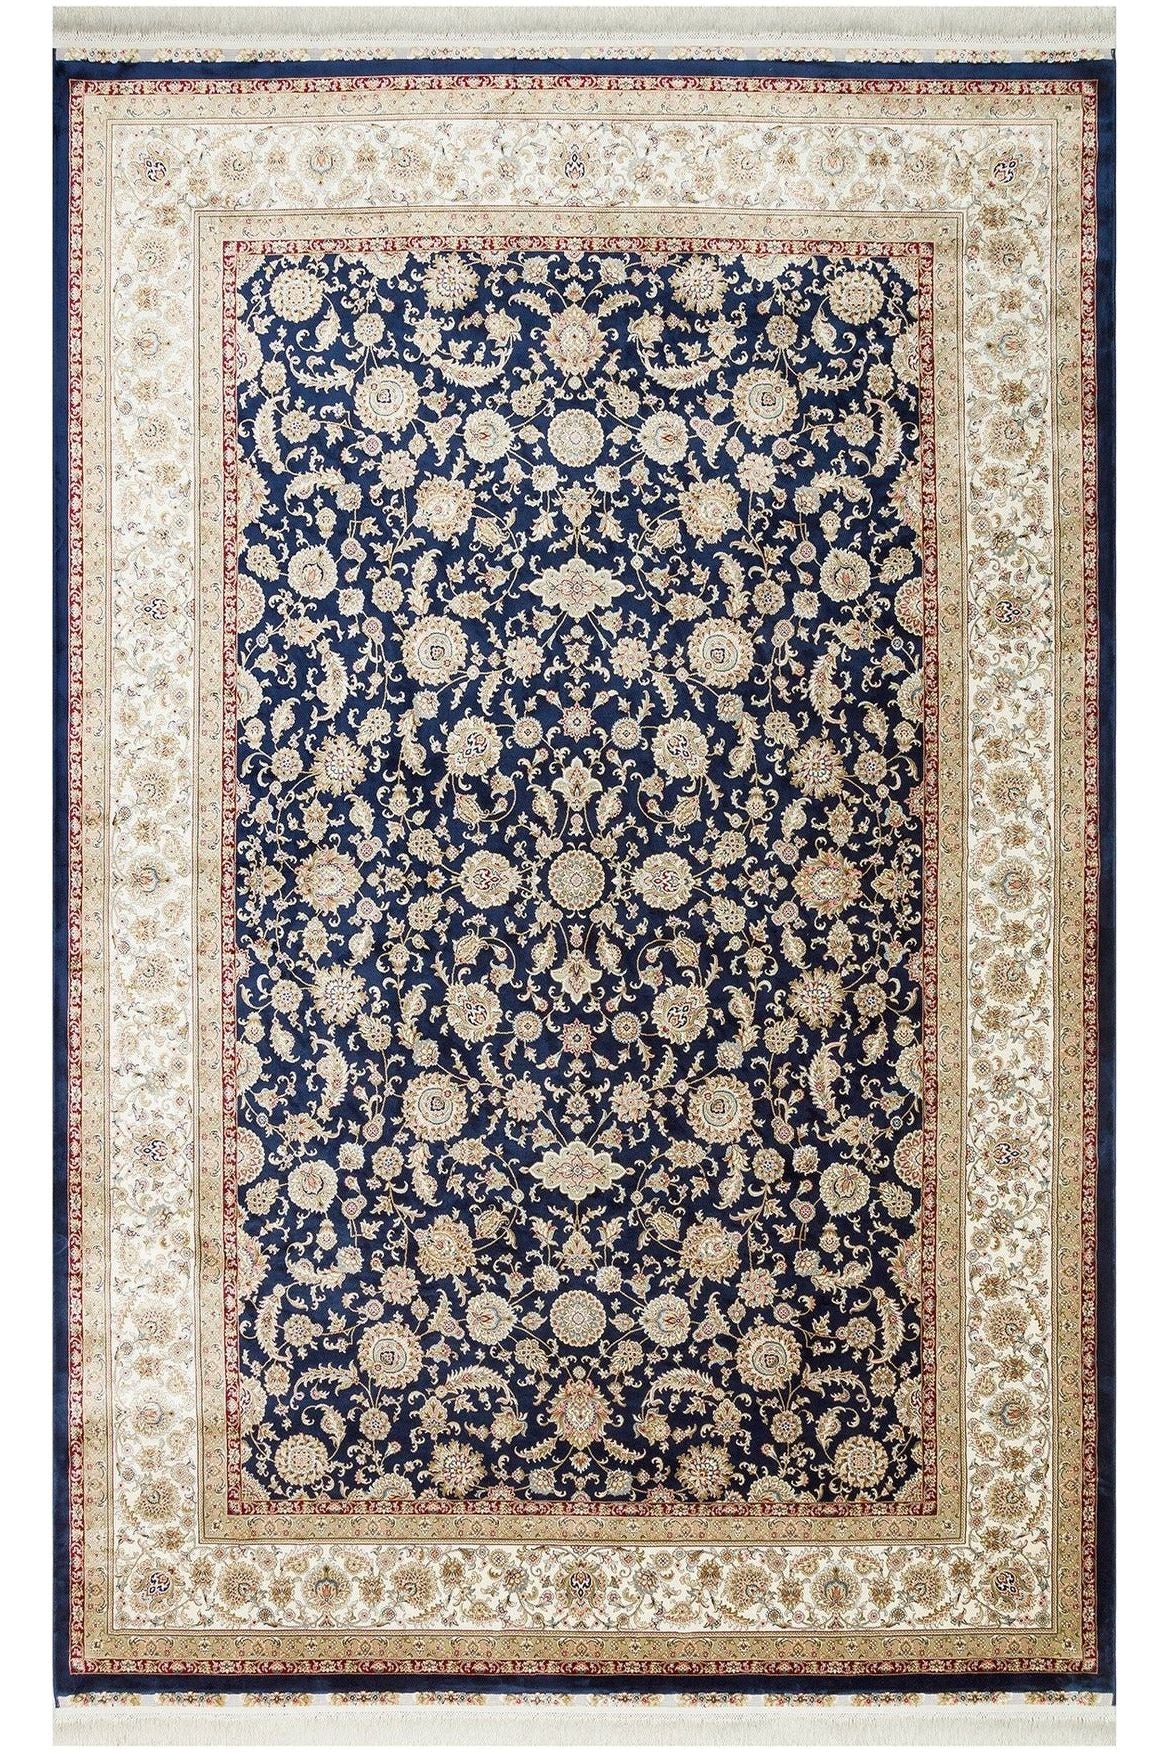 #Turkish_Carpets_Rugs# #Modern_Carpets# #Abrash_Carpets#Isf 03 Navy Cream